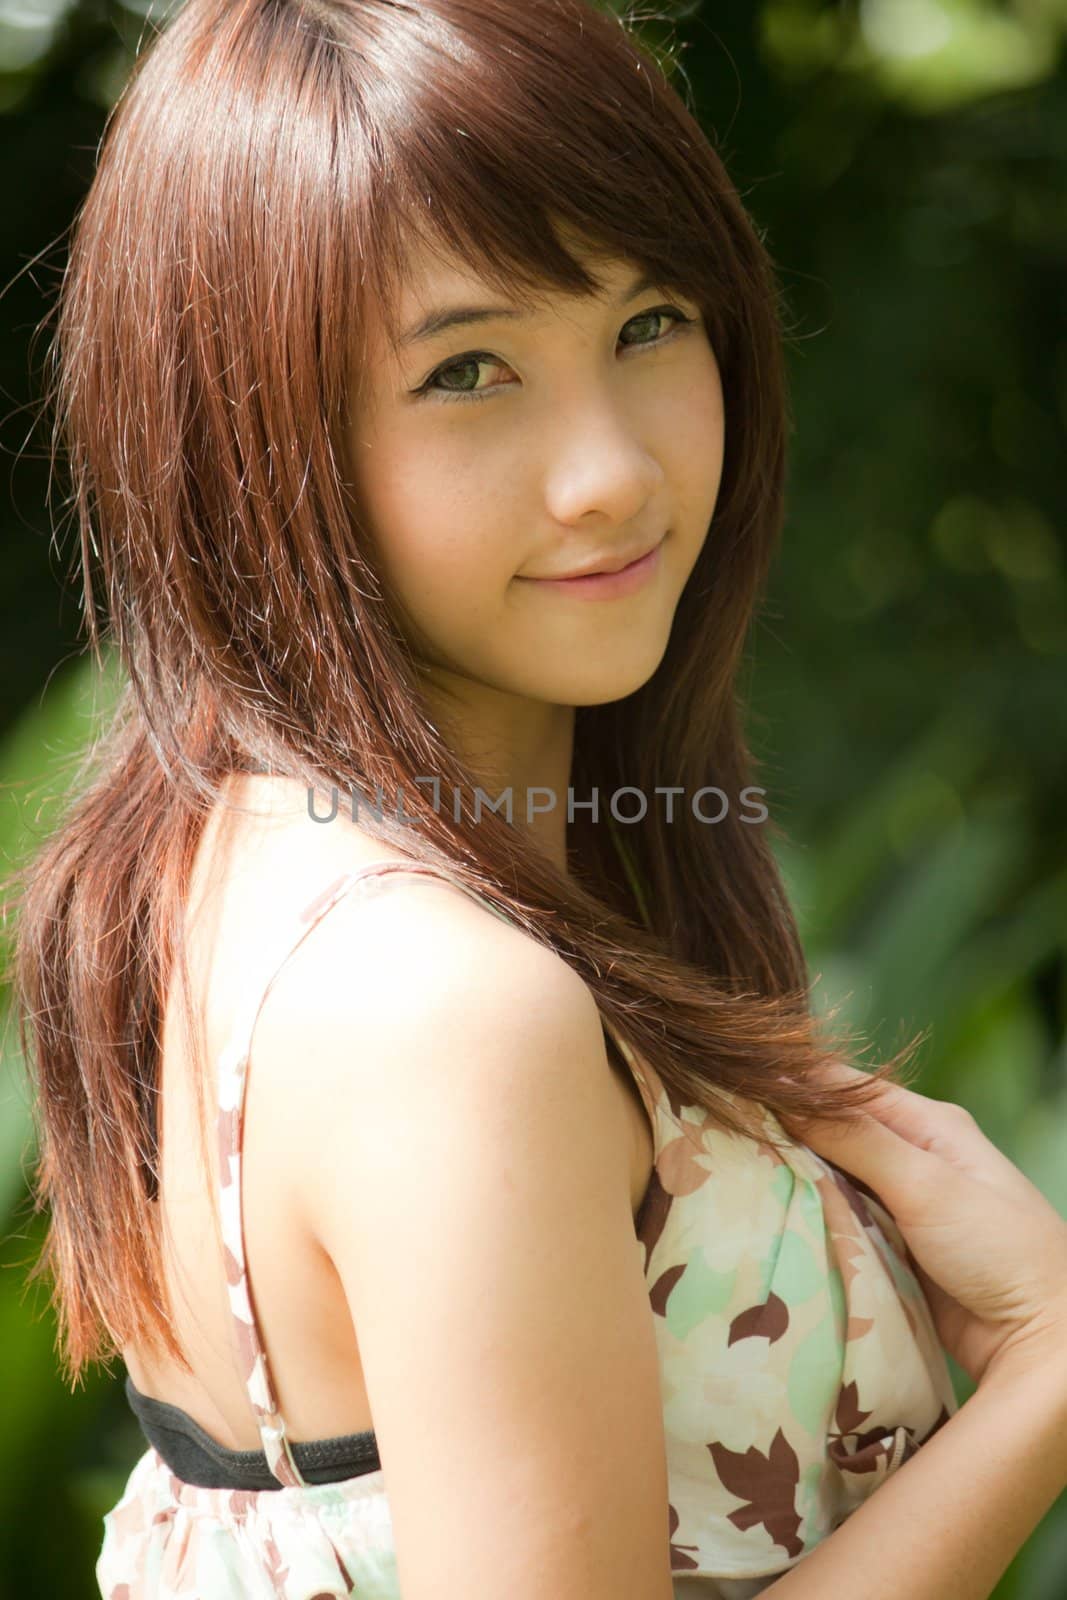 Asian girl by artemisphoto